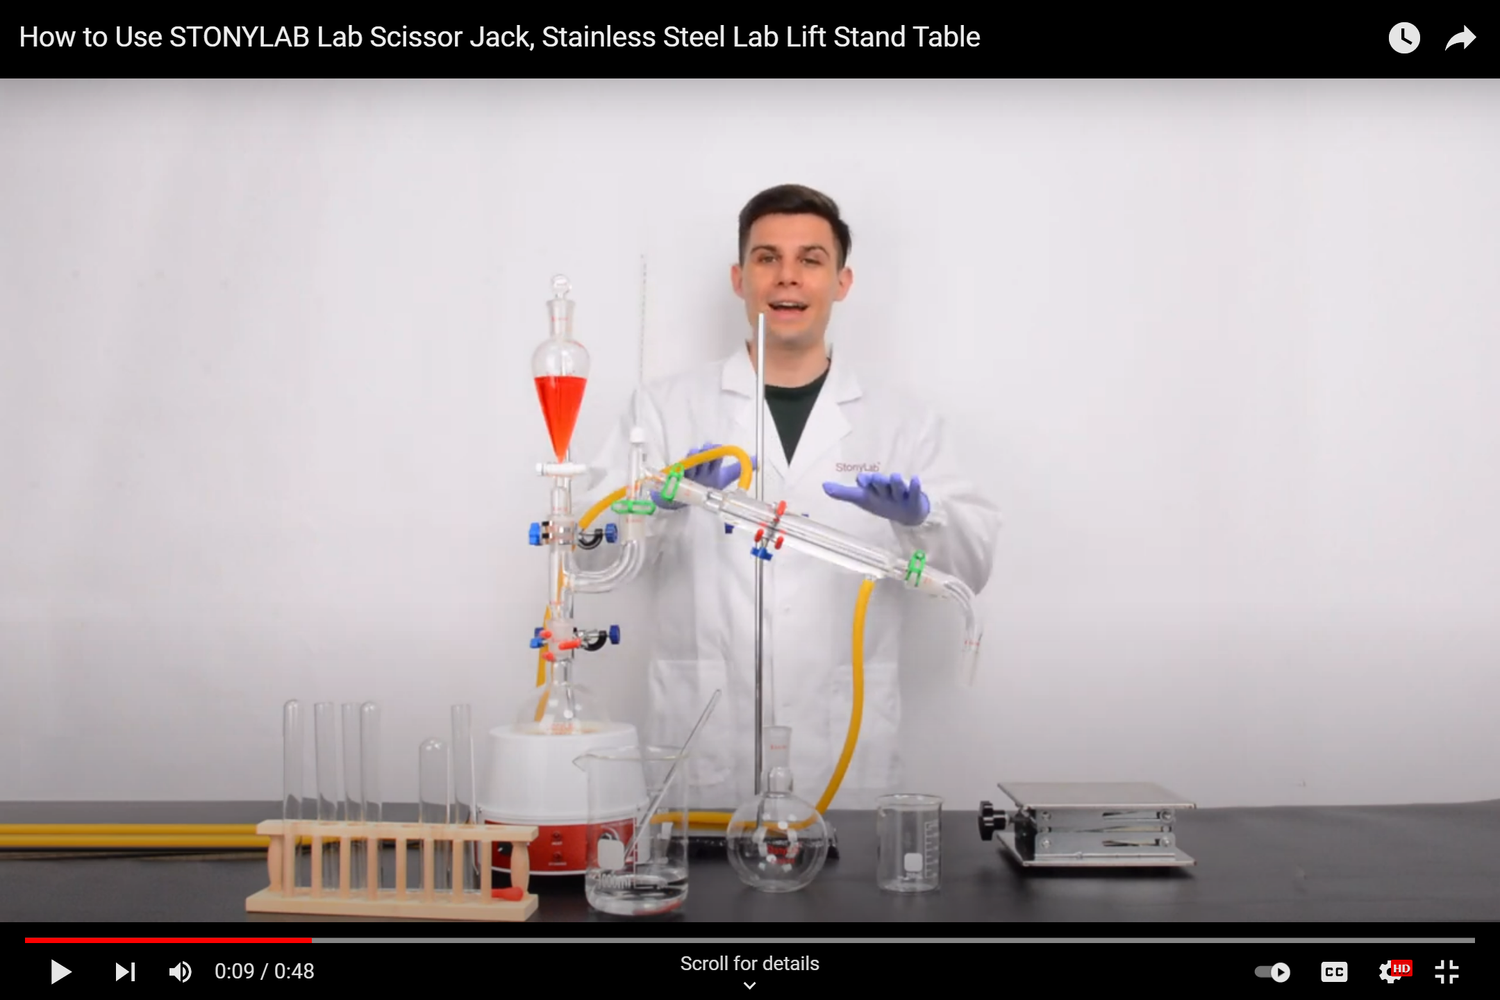 How to use Stonylab lab scissor jack.